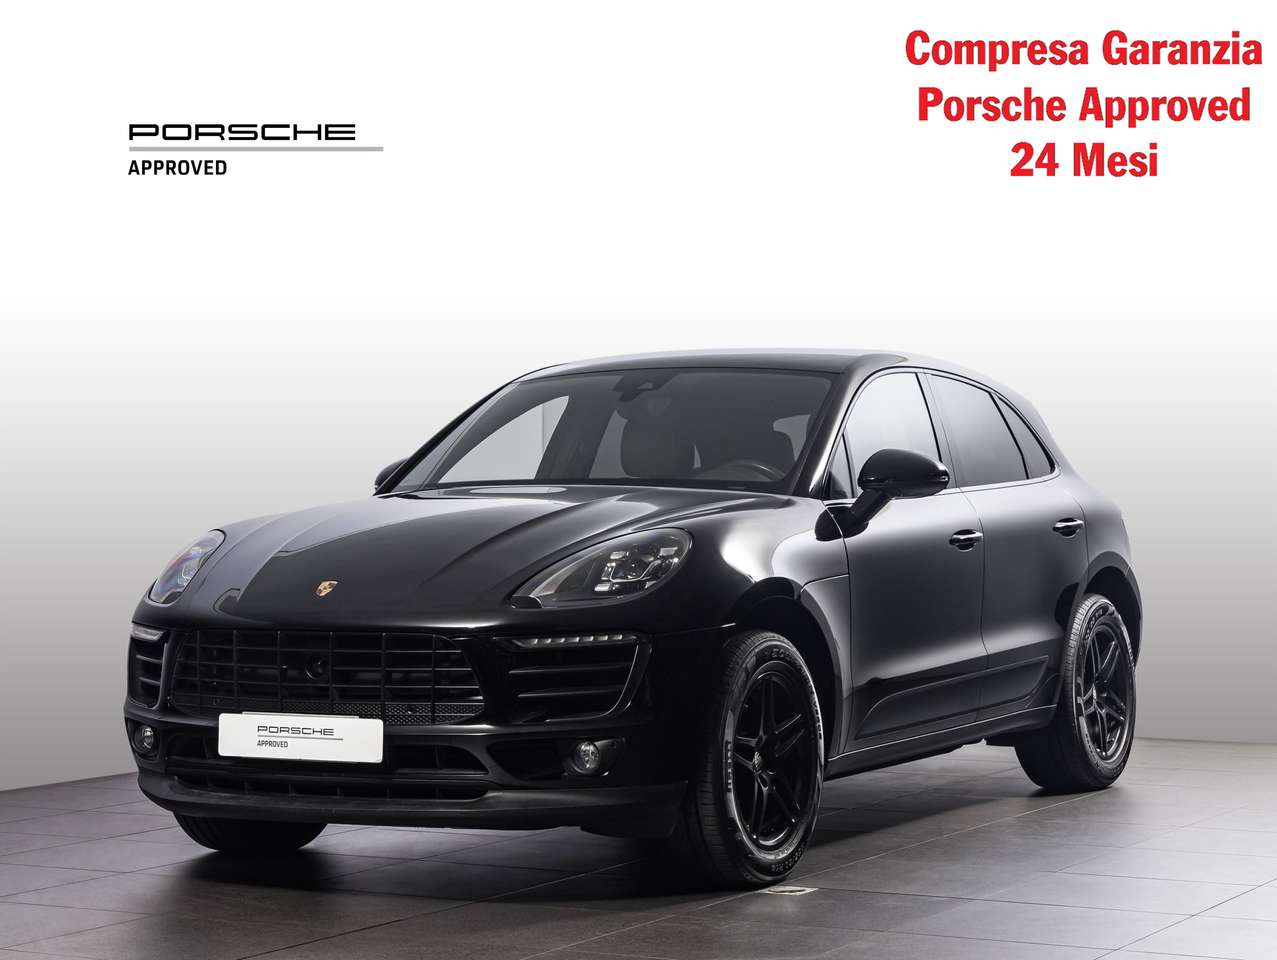 Porsche Macan S Diesel-COMPRESA GARANZIA APPROVED 24 MESI